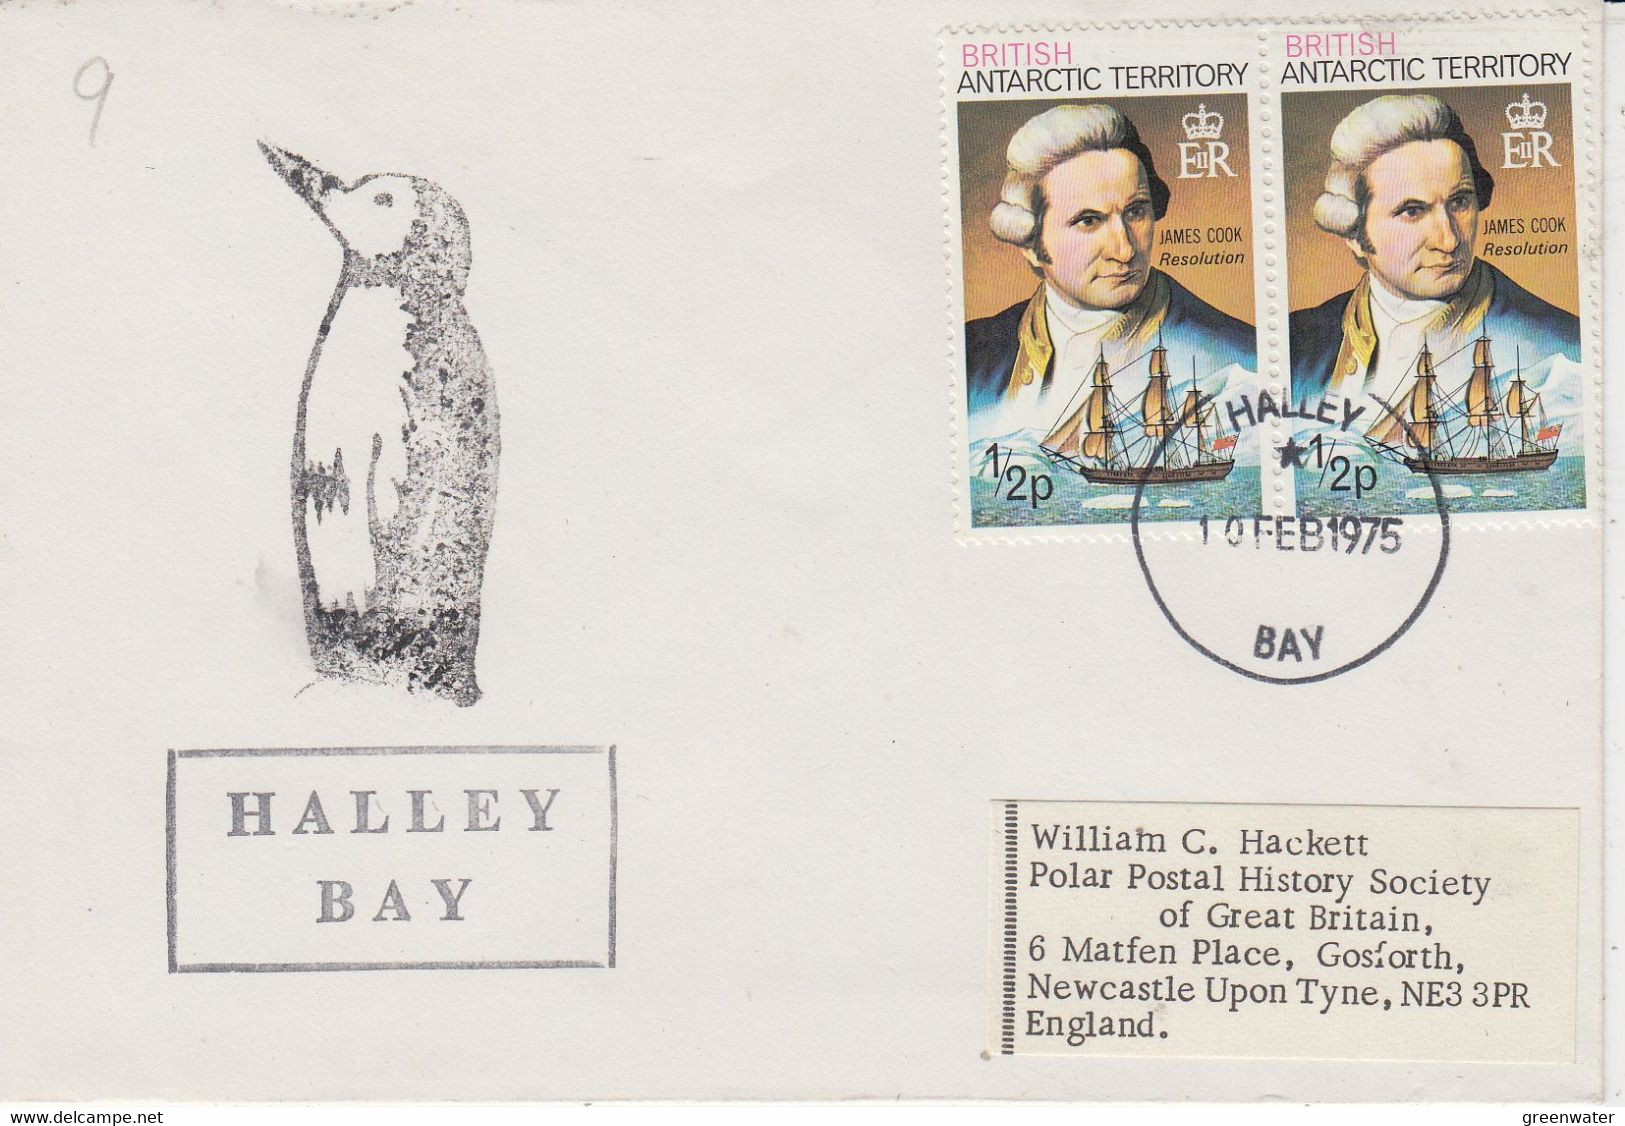 British Antarctic Territory (BAT) Halley Bay Ca Halley  Bay 10 FEB 1975 (TA180) - Covers & Documents